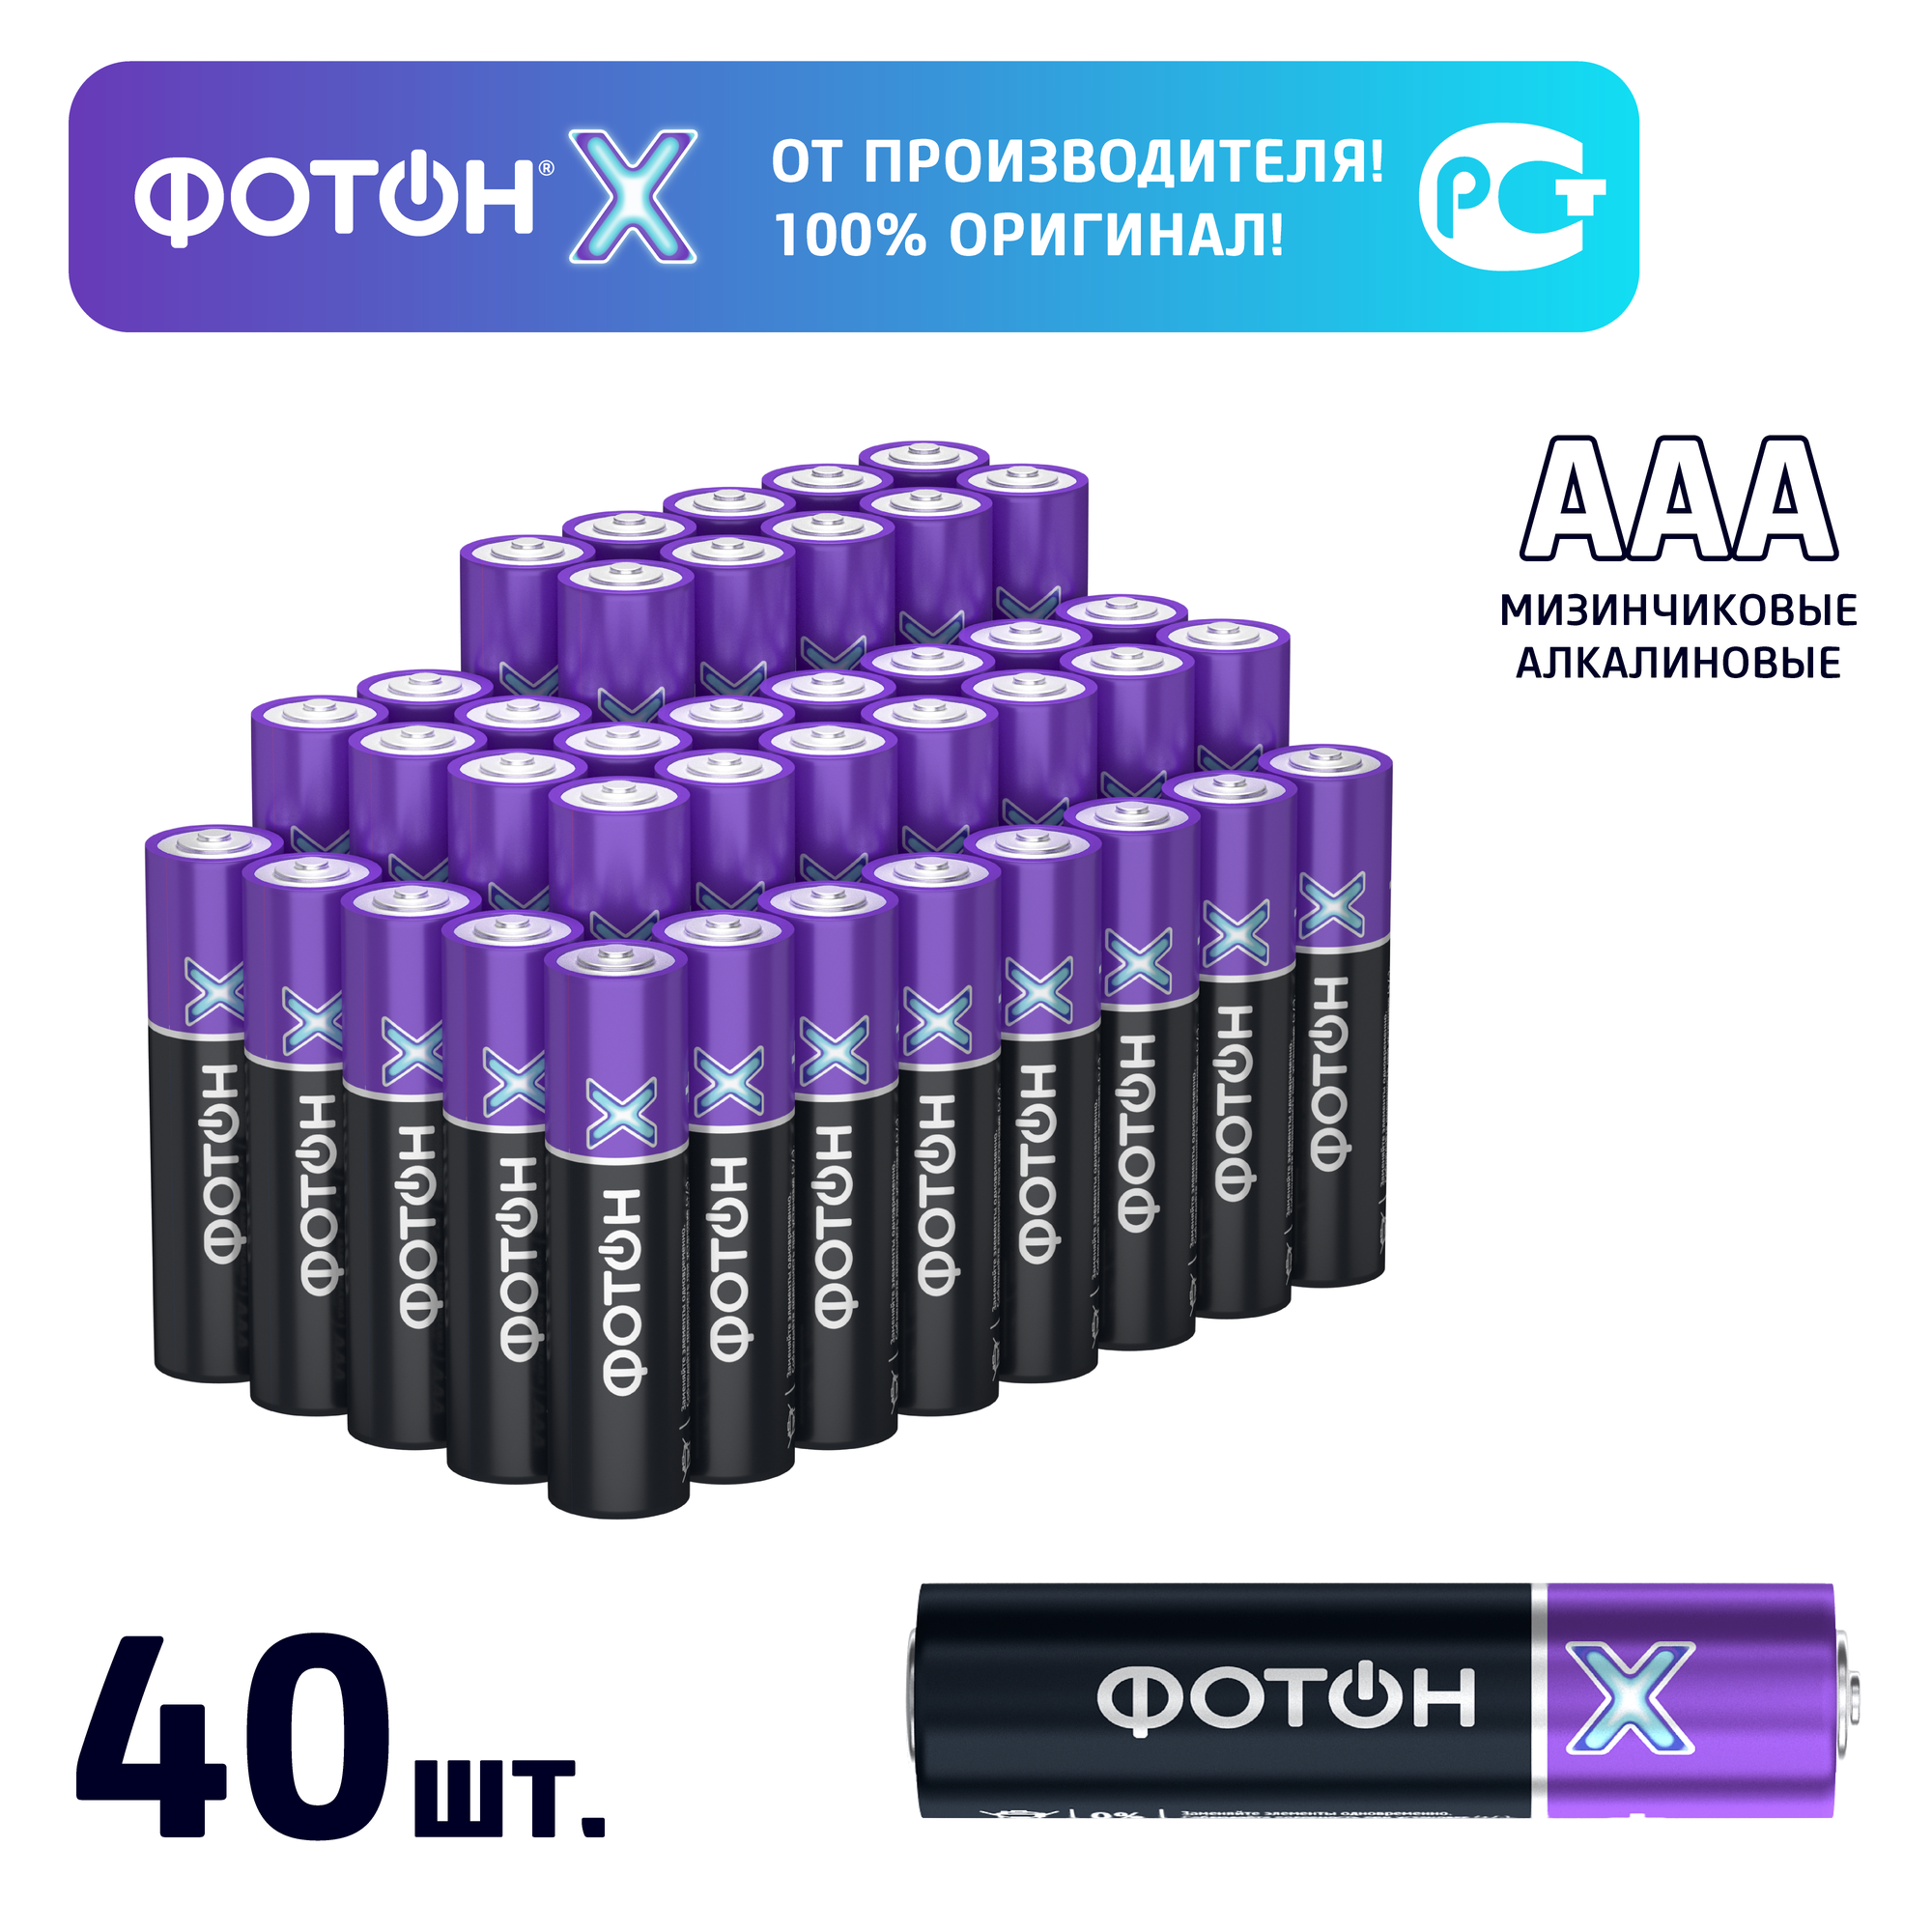 Упаковка батареек фотон - Х ААА / LR03 (мизинчиковые) 40 шт.